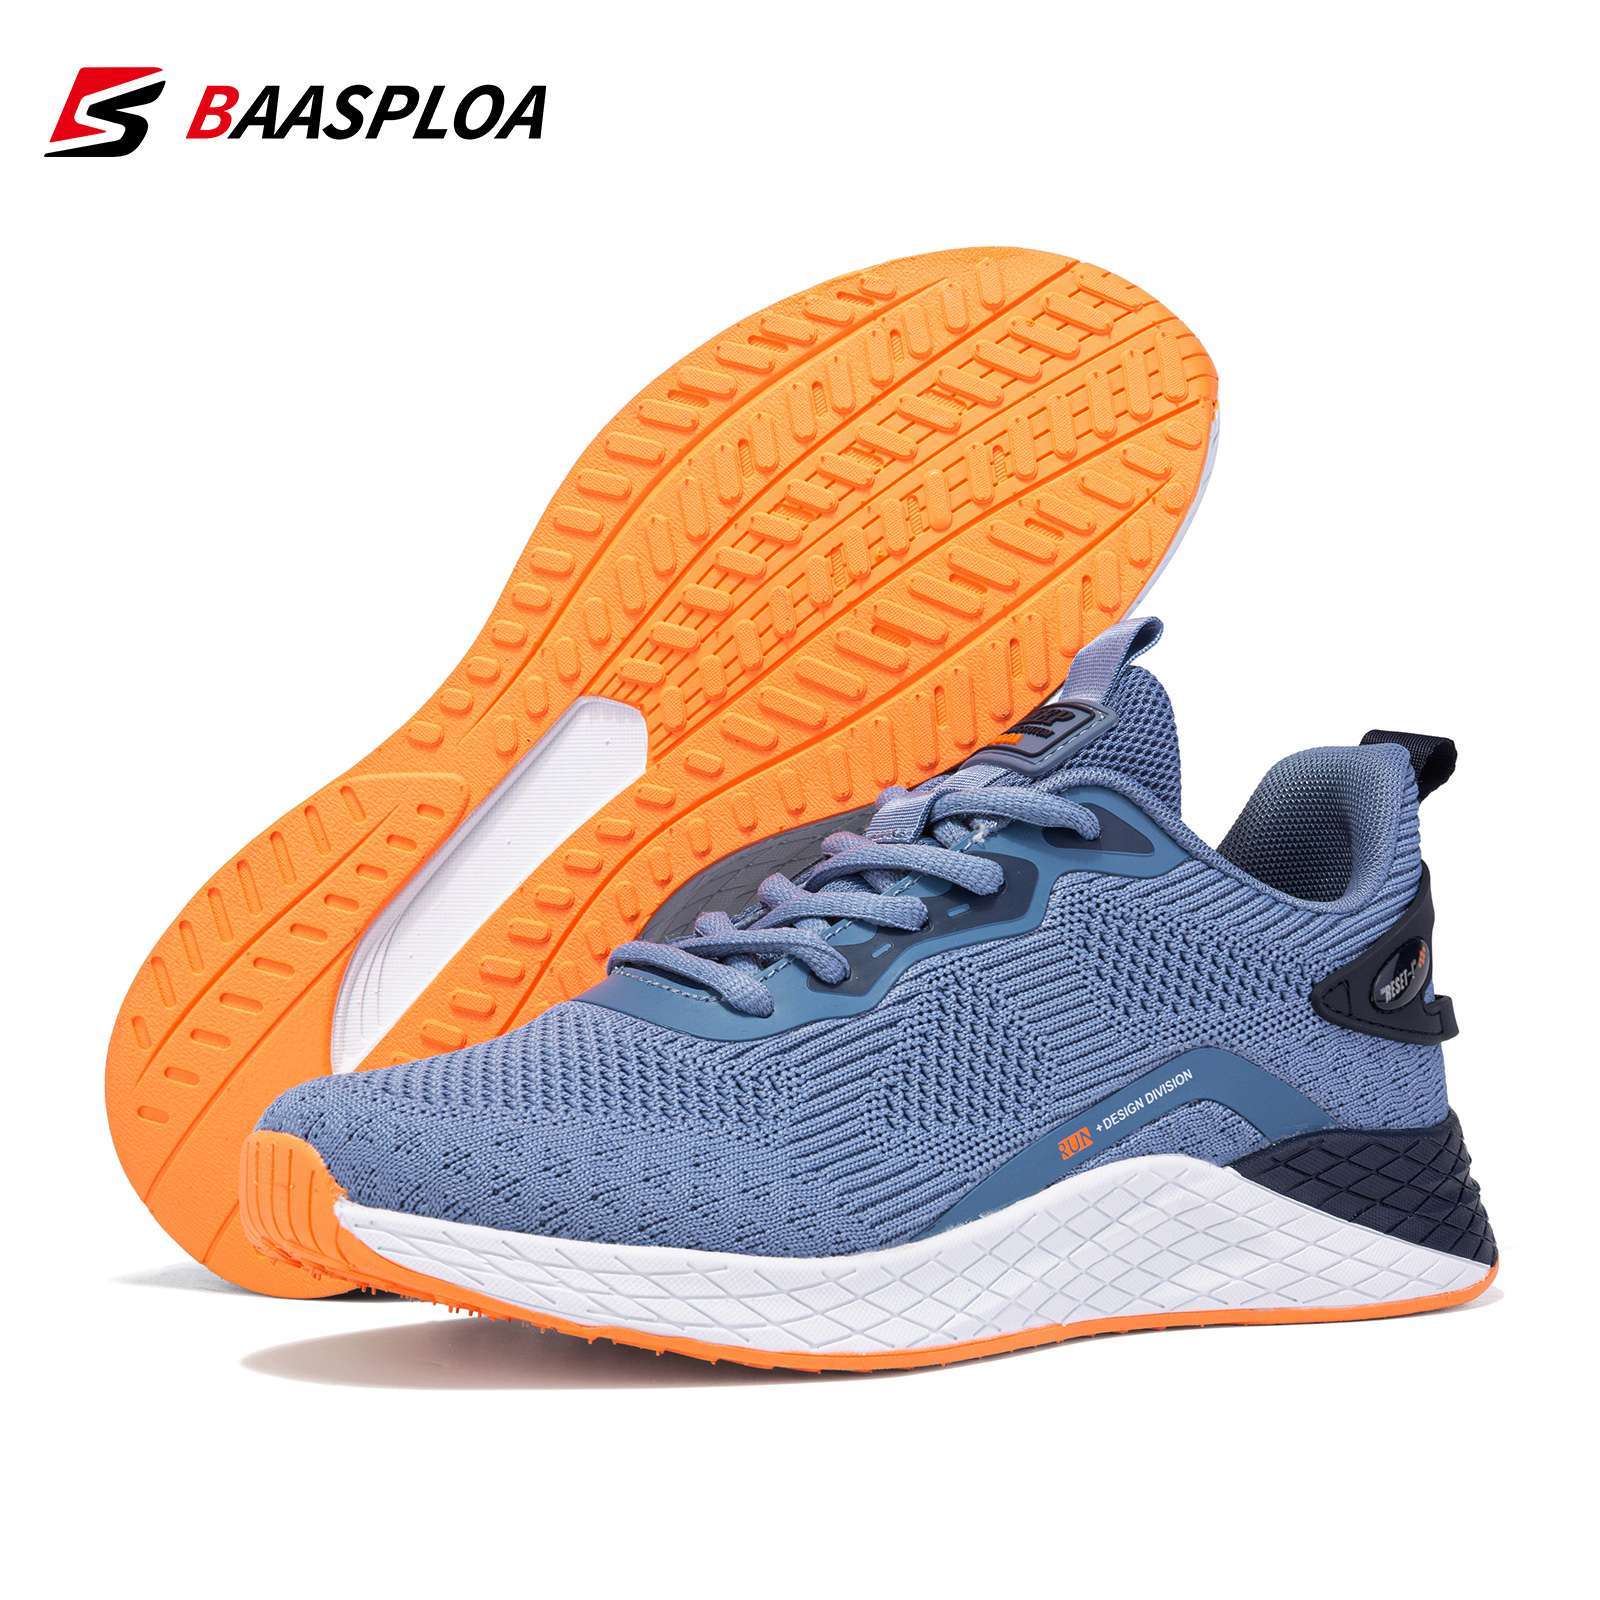 Baasploa Sneakers New Fashion Men Sneakers Breathable Walking Shoes Comfortable Anti Slip Shock Absorbing Knit Male 5